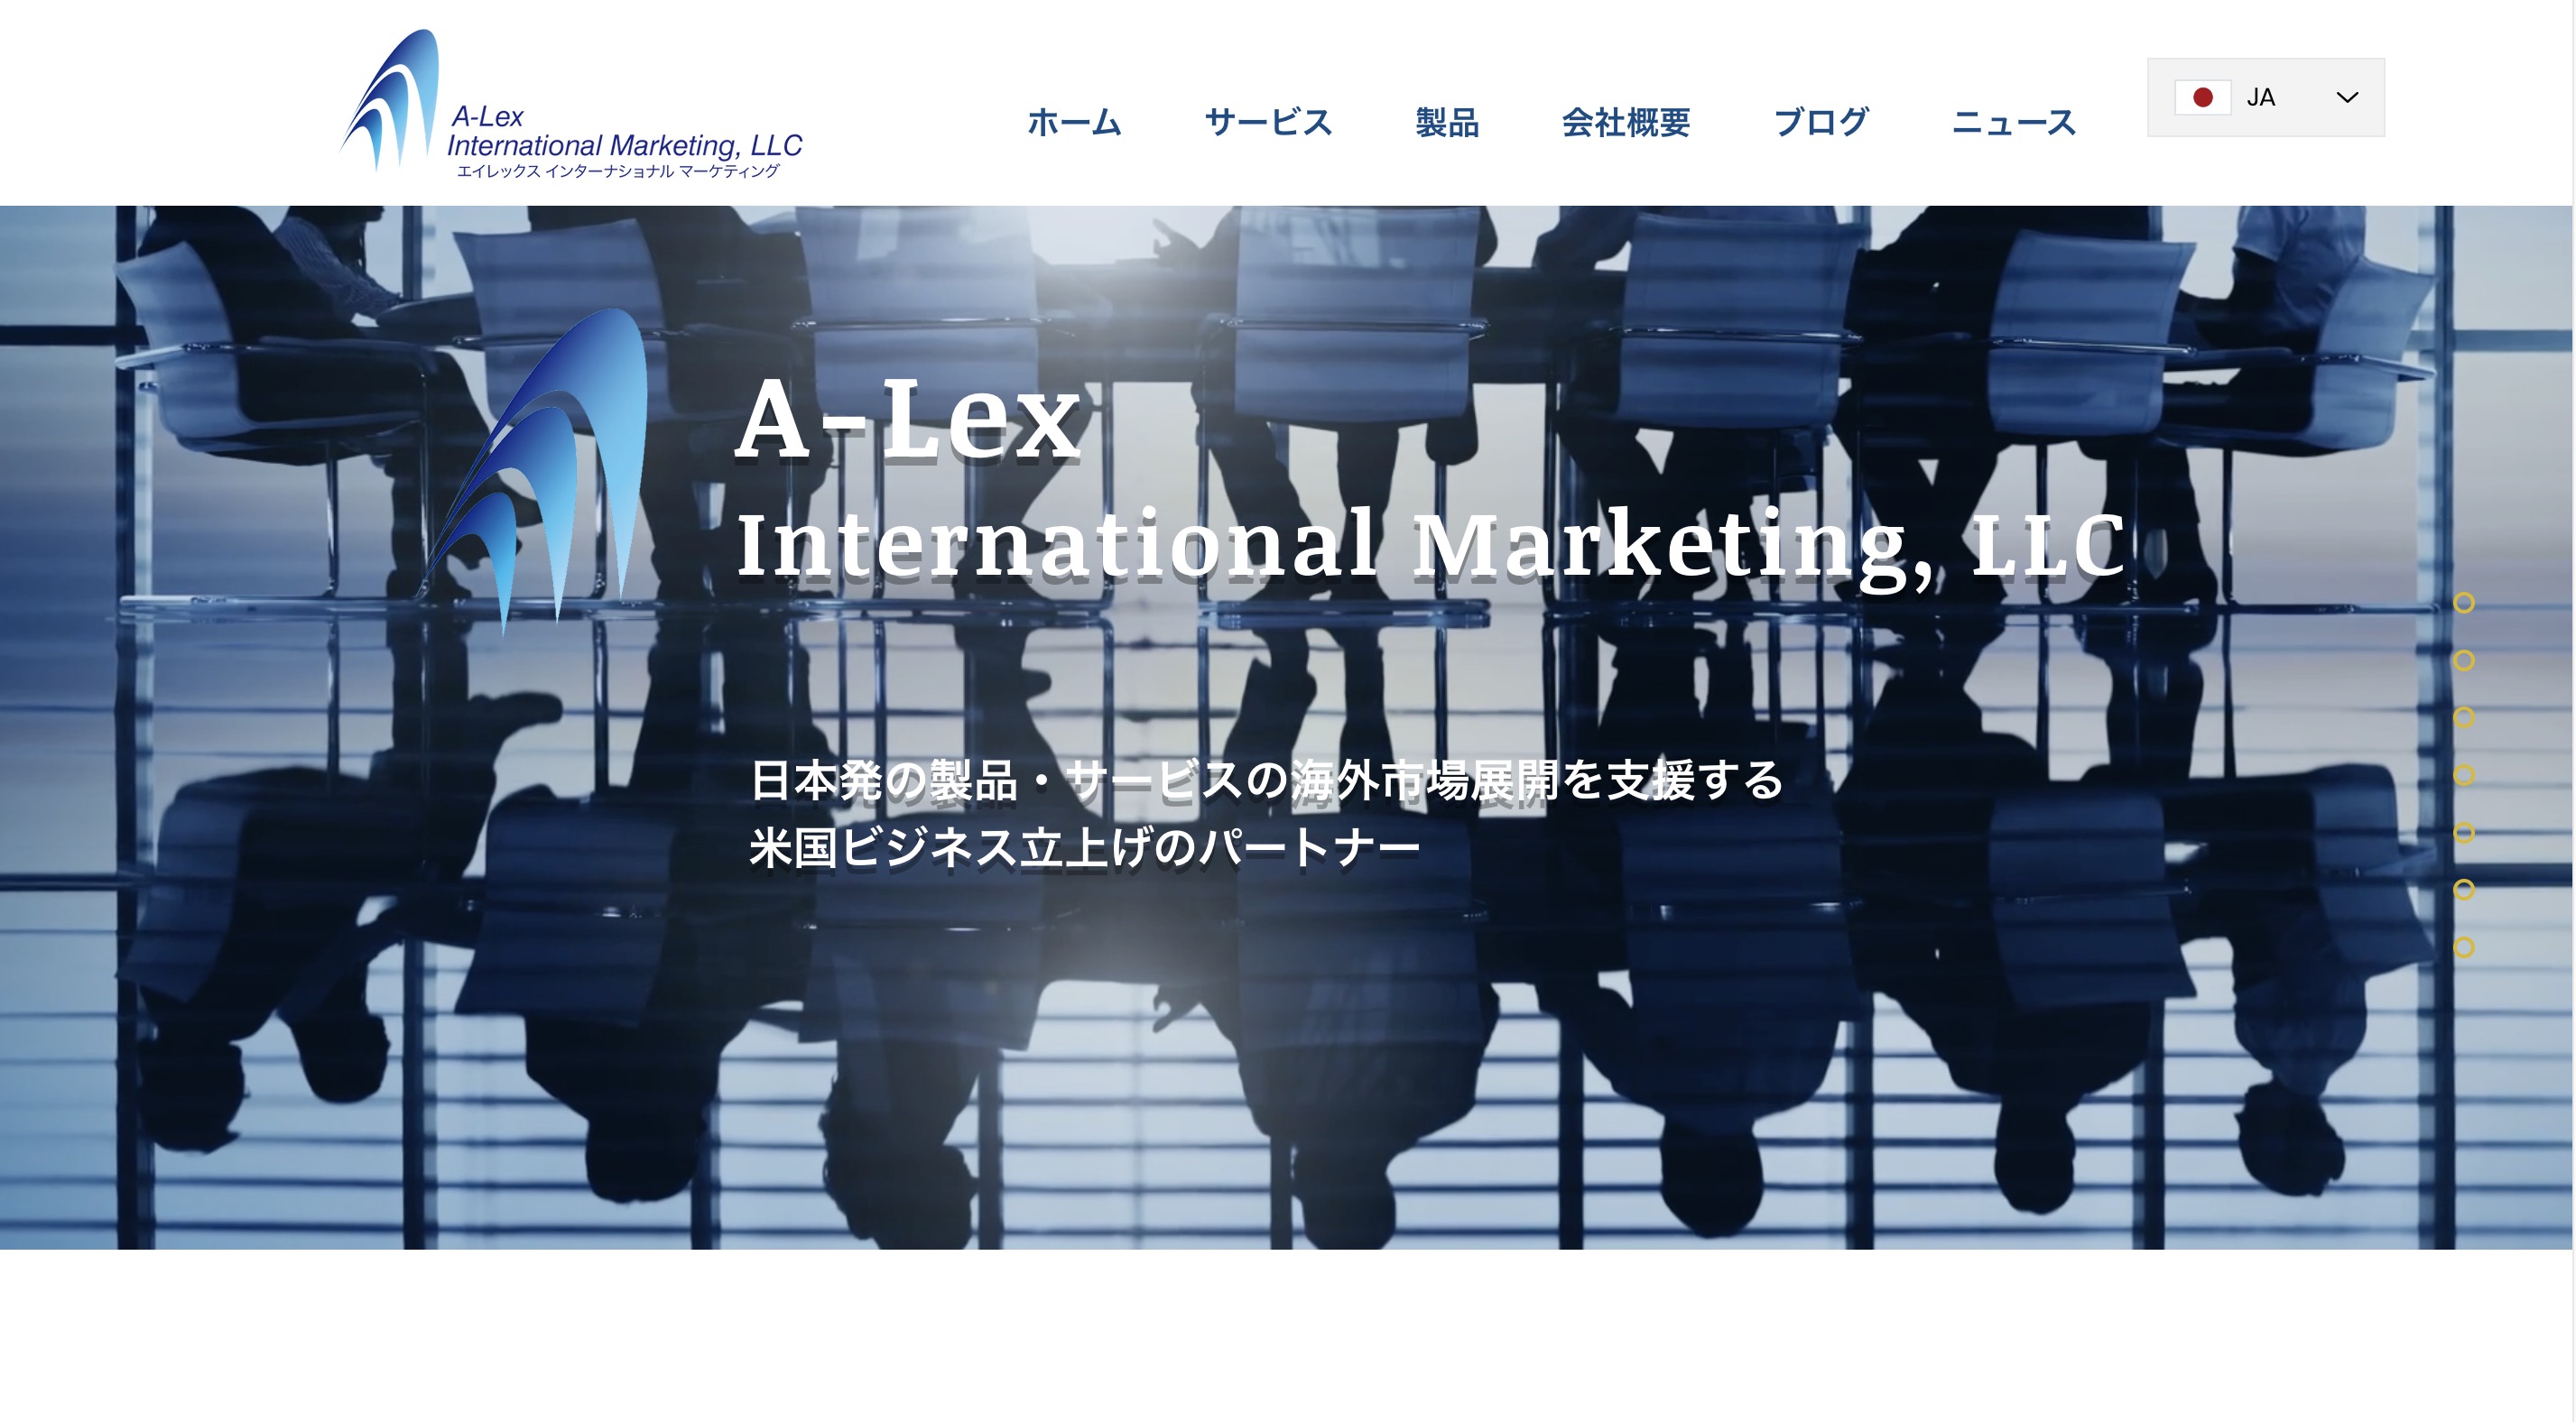 A-Lex International Marketing